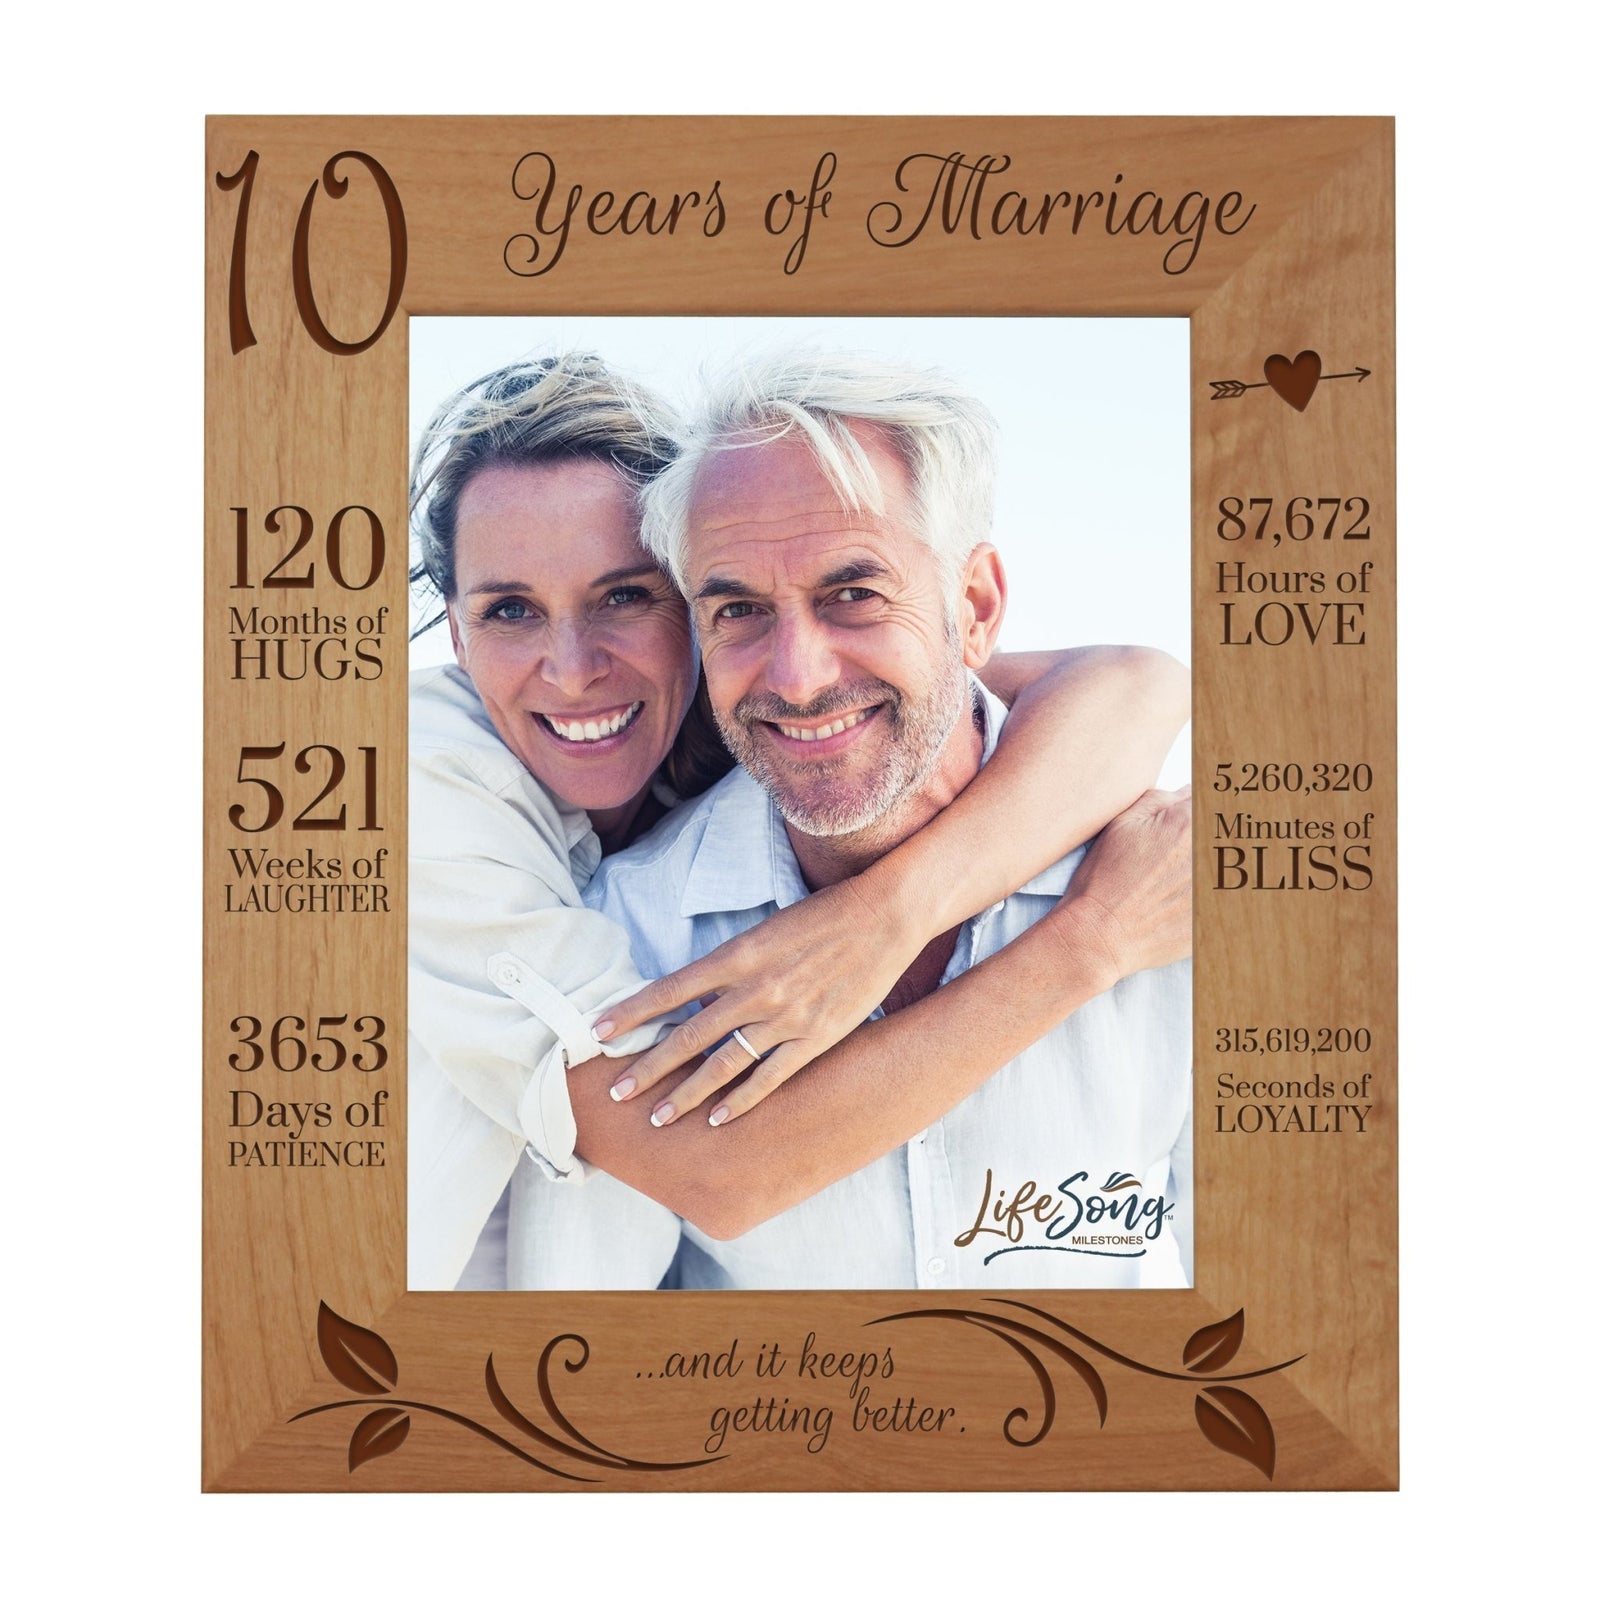 Lifesong Milestones Couples 10th Wedding Anniversary Photo Frame Home Decor Gift Ideas